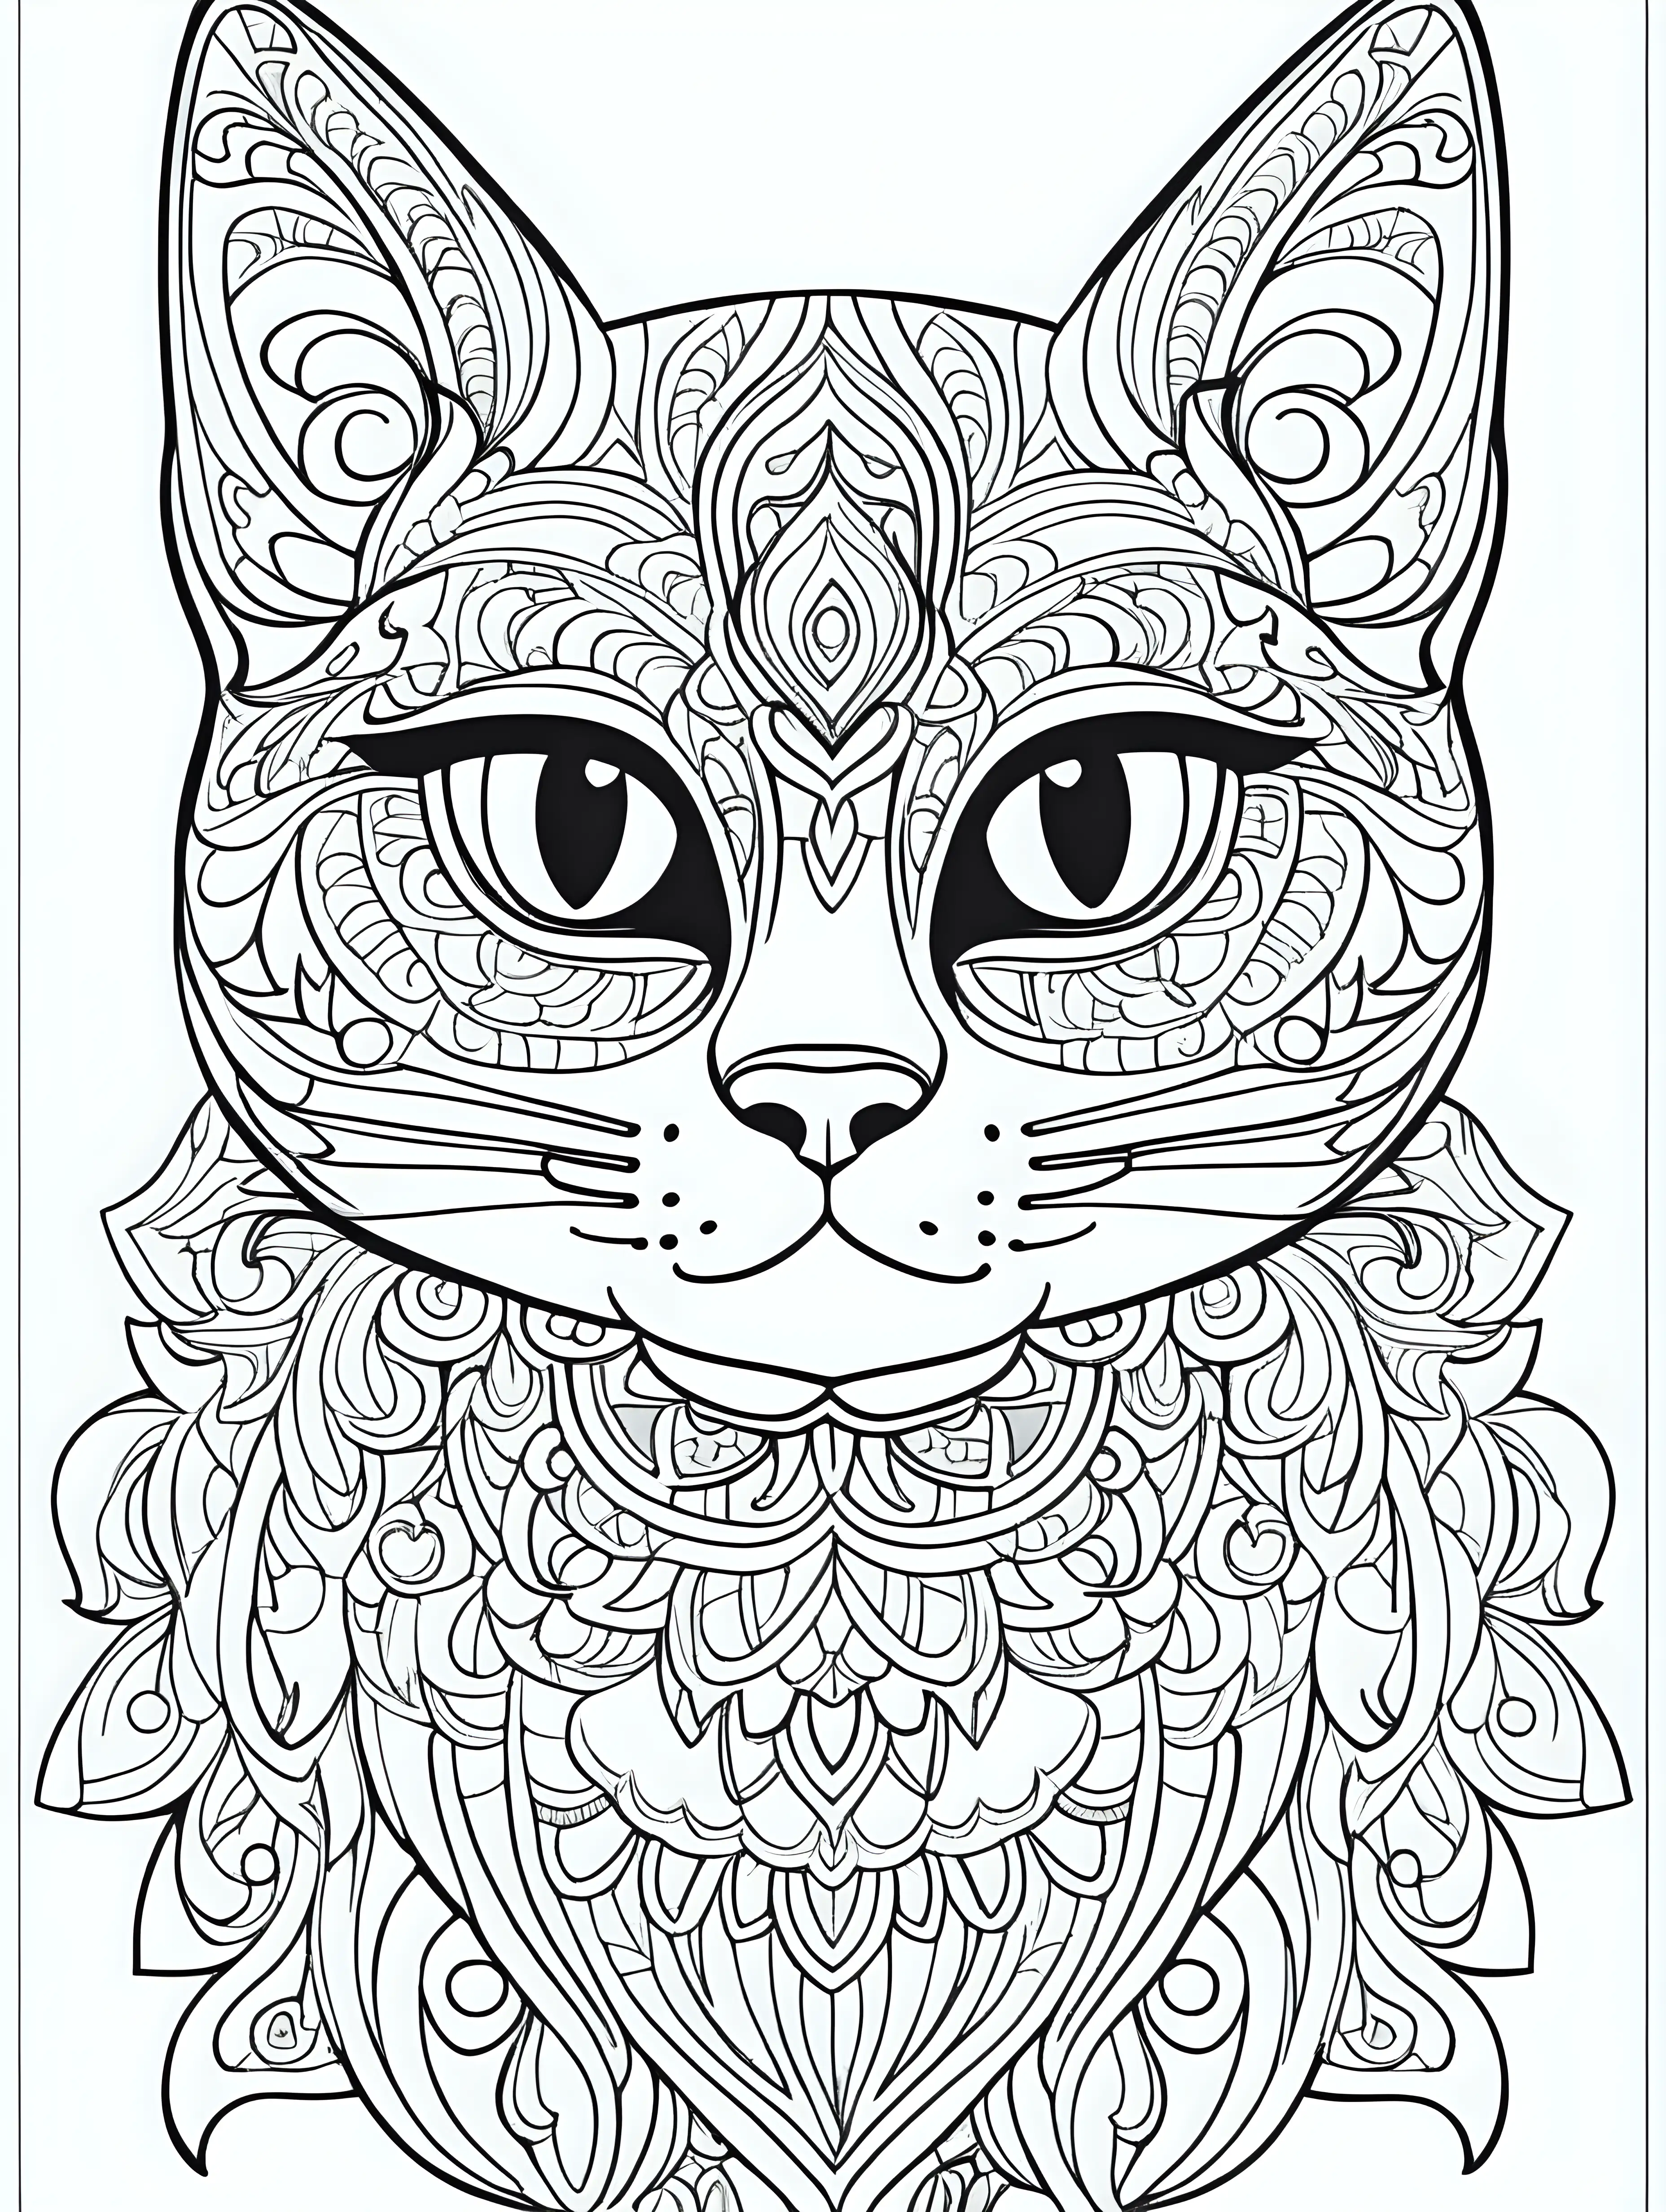 Mandala Cat Cartoon Whimsical Feline Design for Coloring Book Enthusiasts